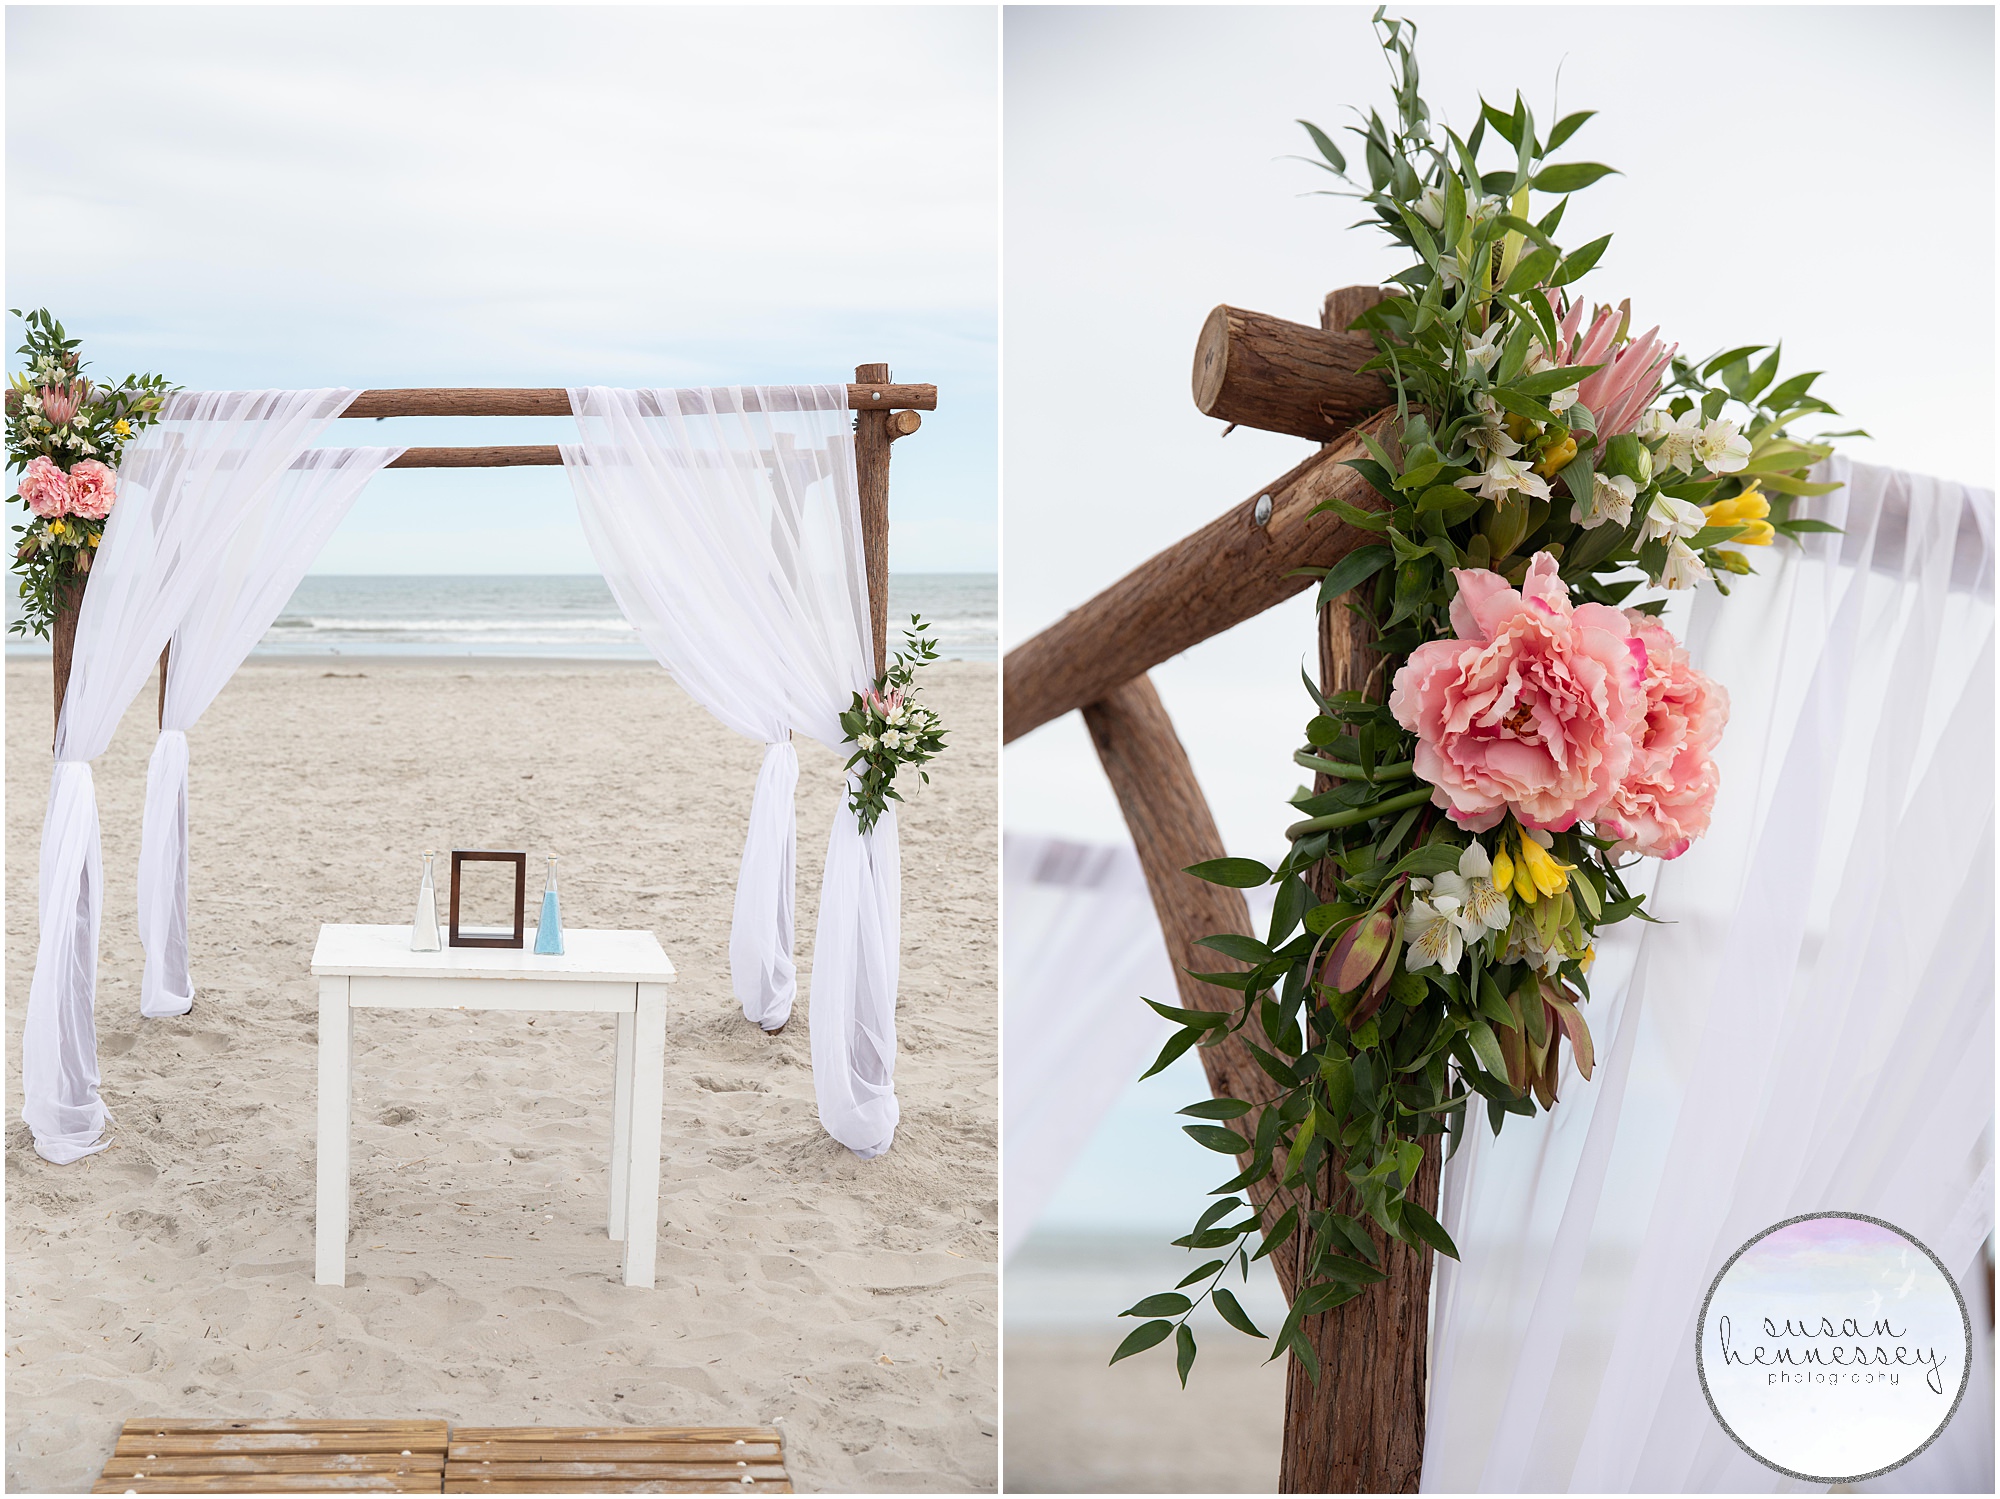 Details of beach ceremony at ICONA Avalon Wedding